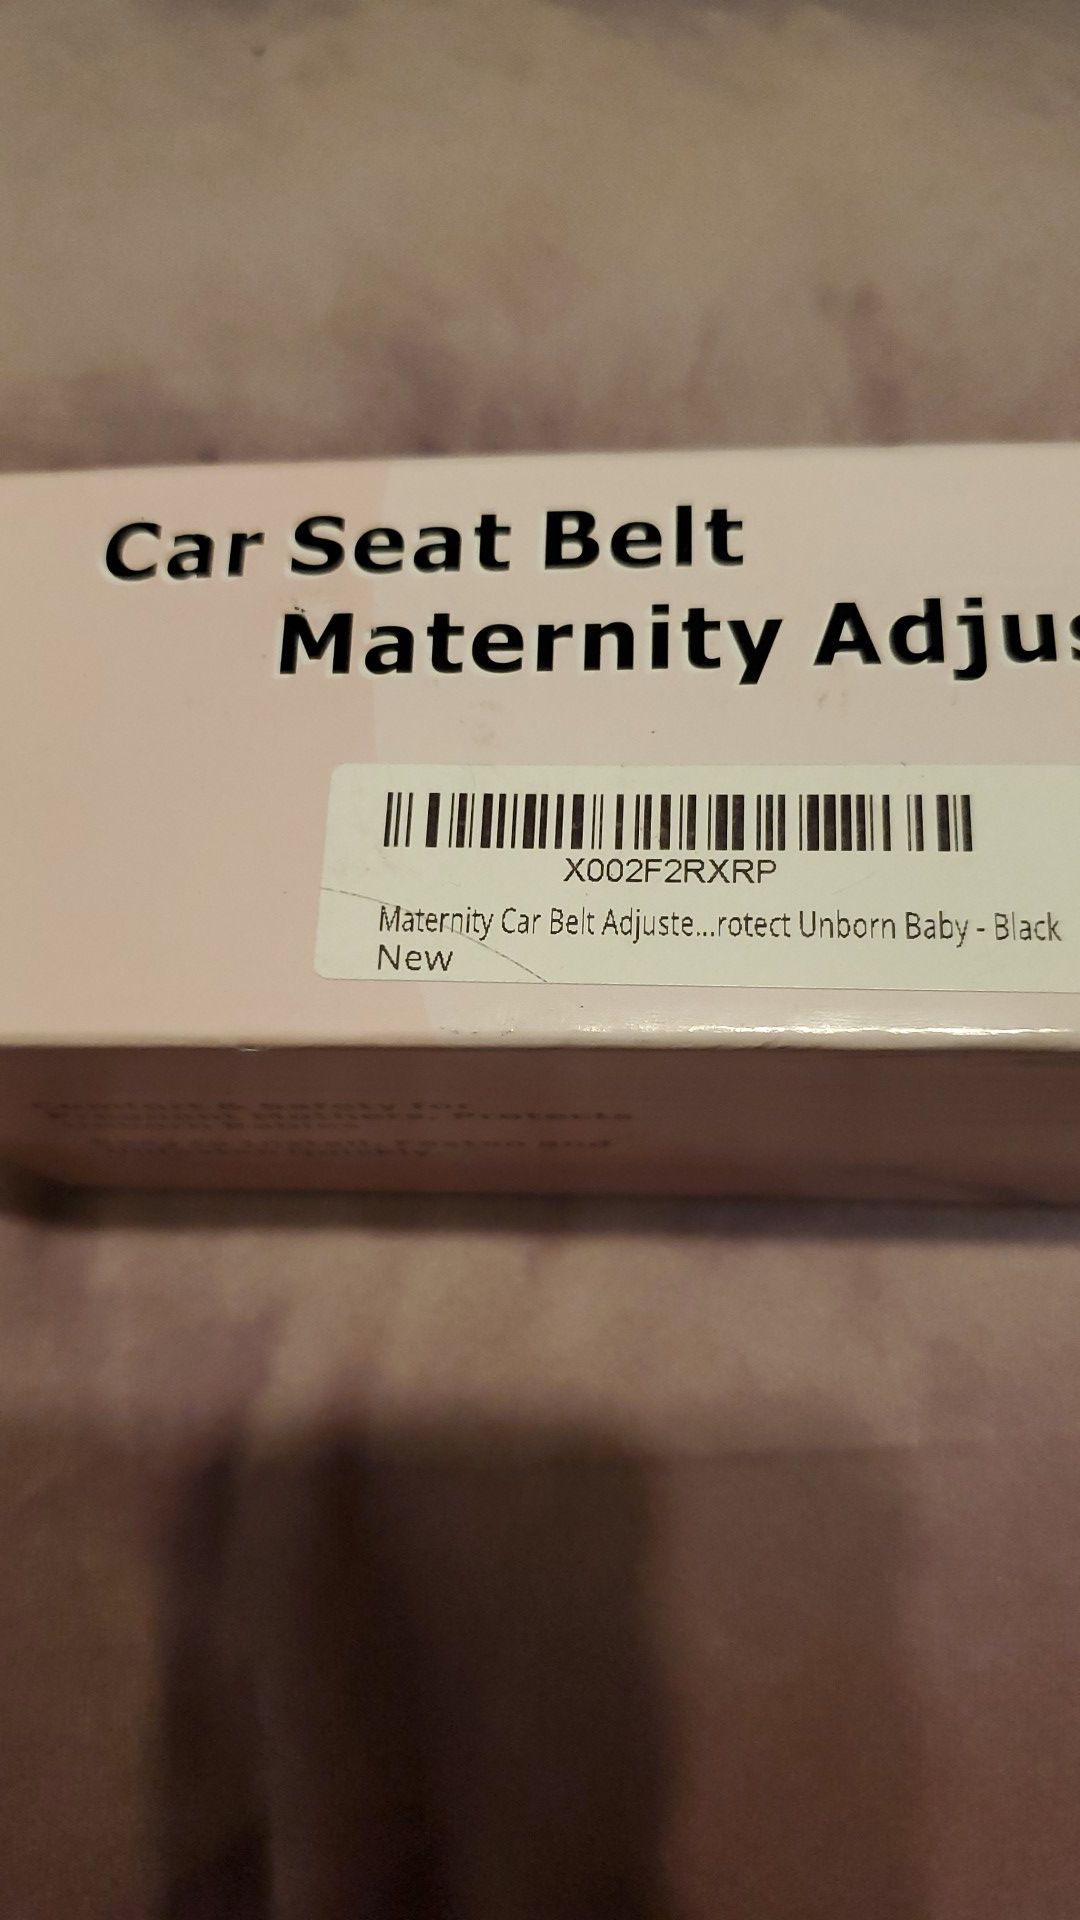 Maternity car seat belt adjuster